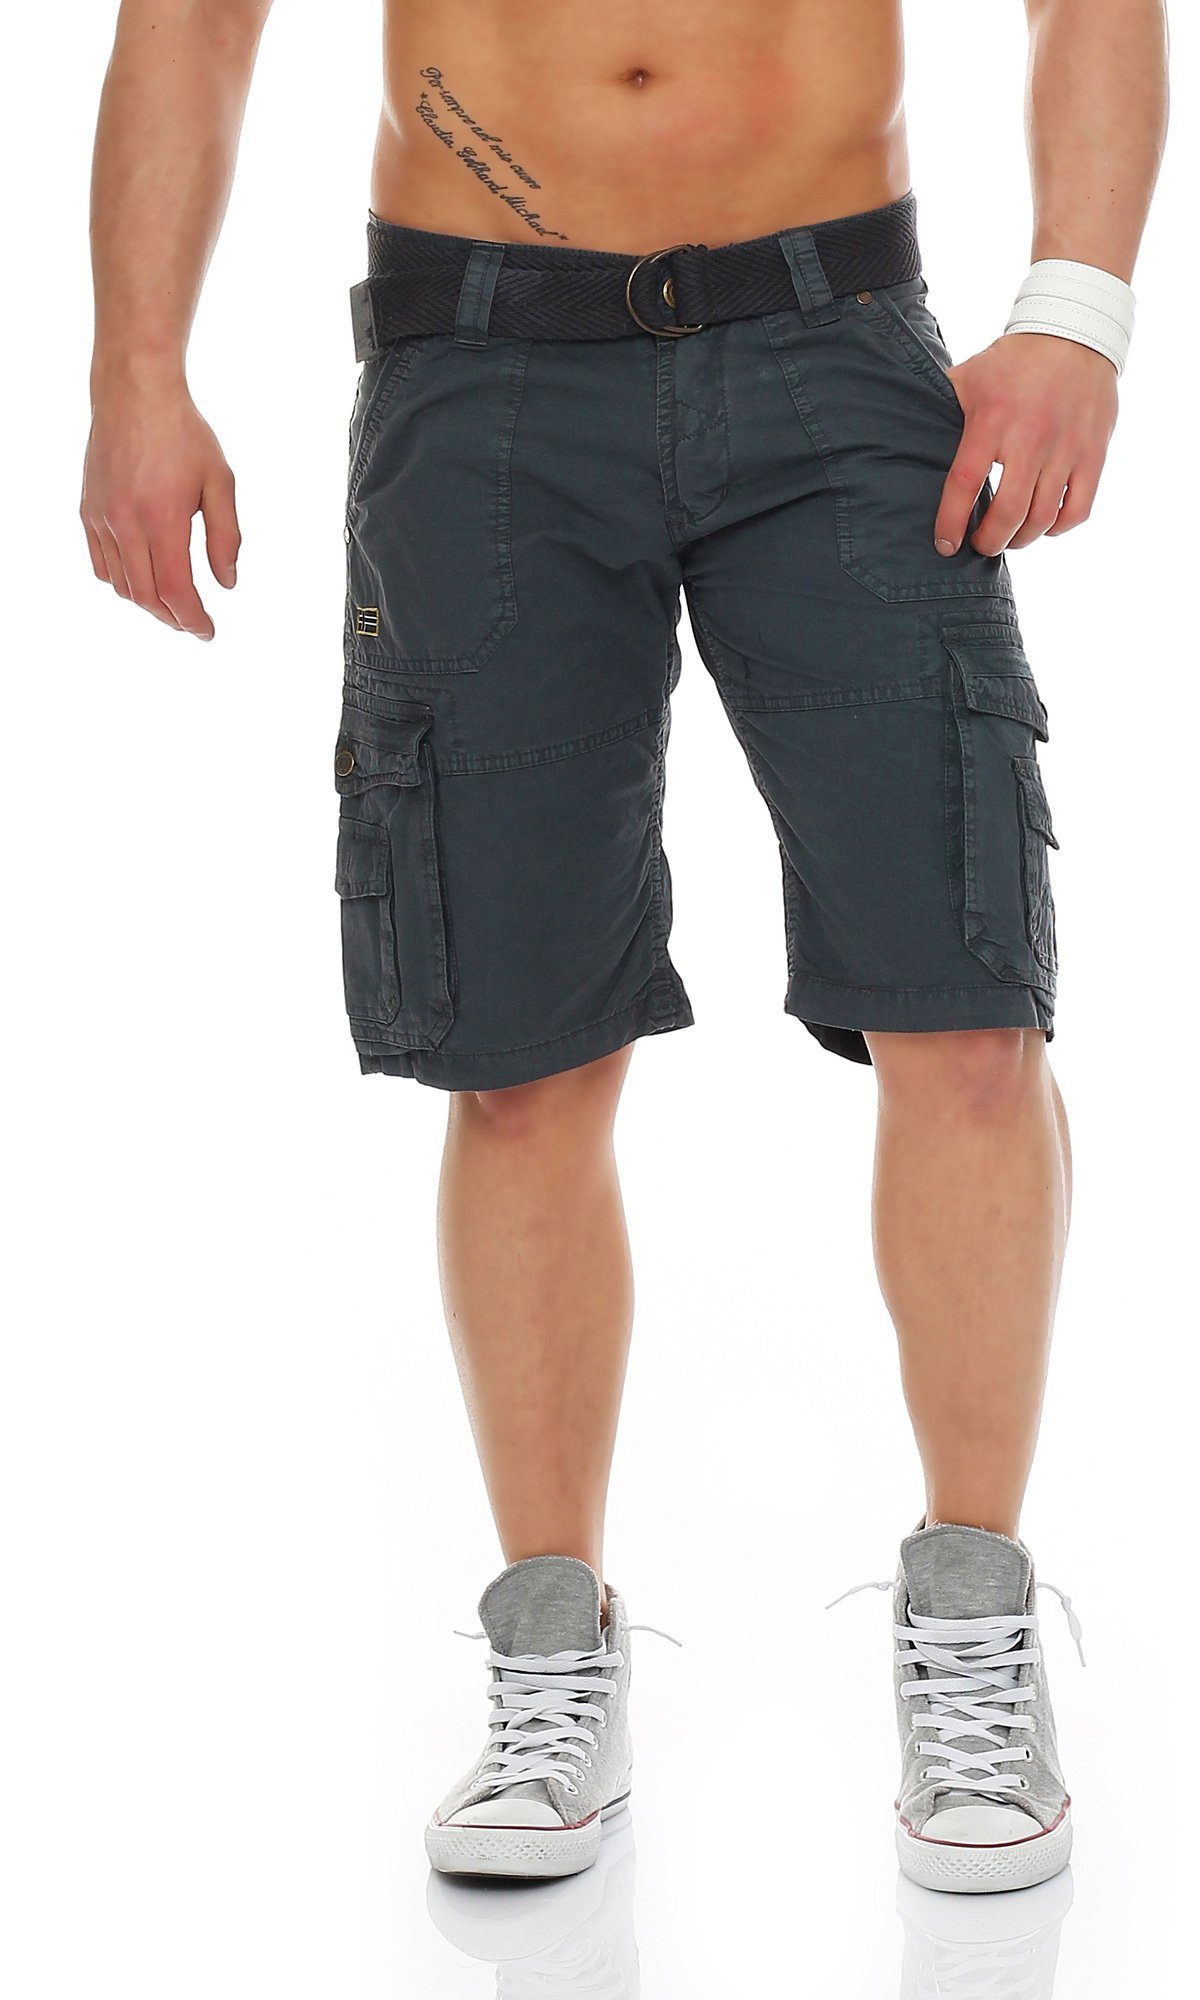 Geographical Norway Cargoshorts Herren Shorts PARACHUTE (mit abnehmbarem Gürtel) Shorts, kurze Hose, unifarben Blau